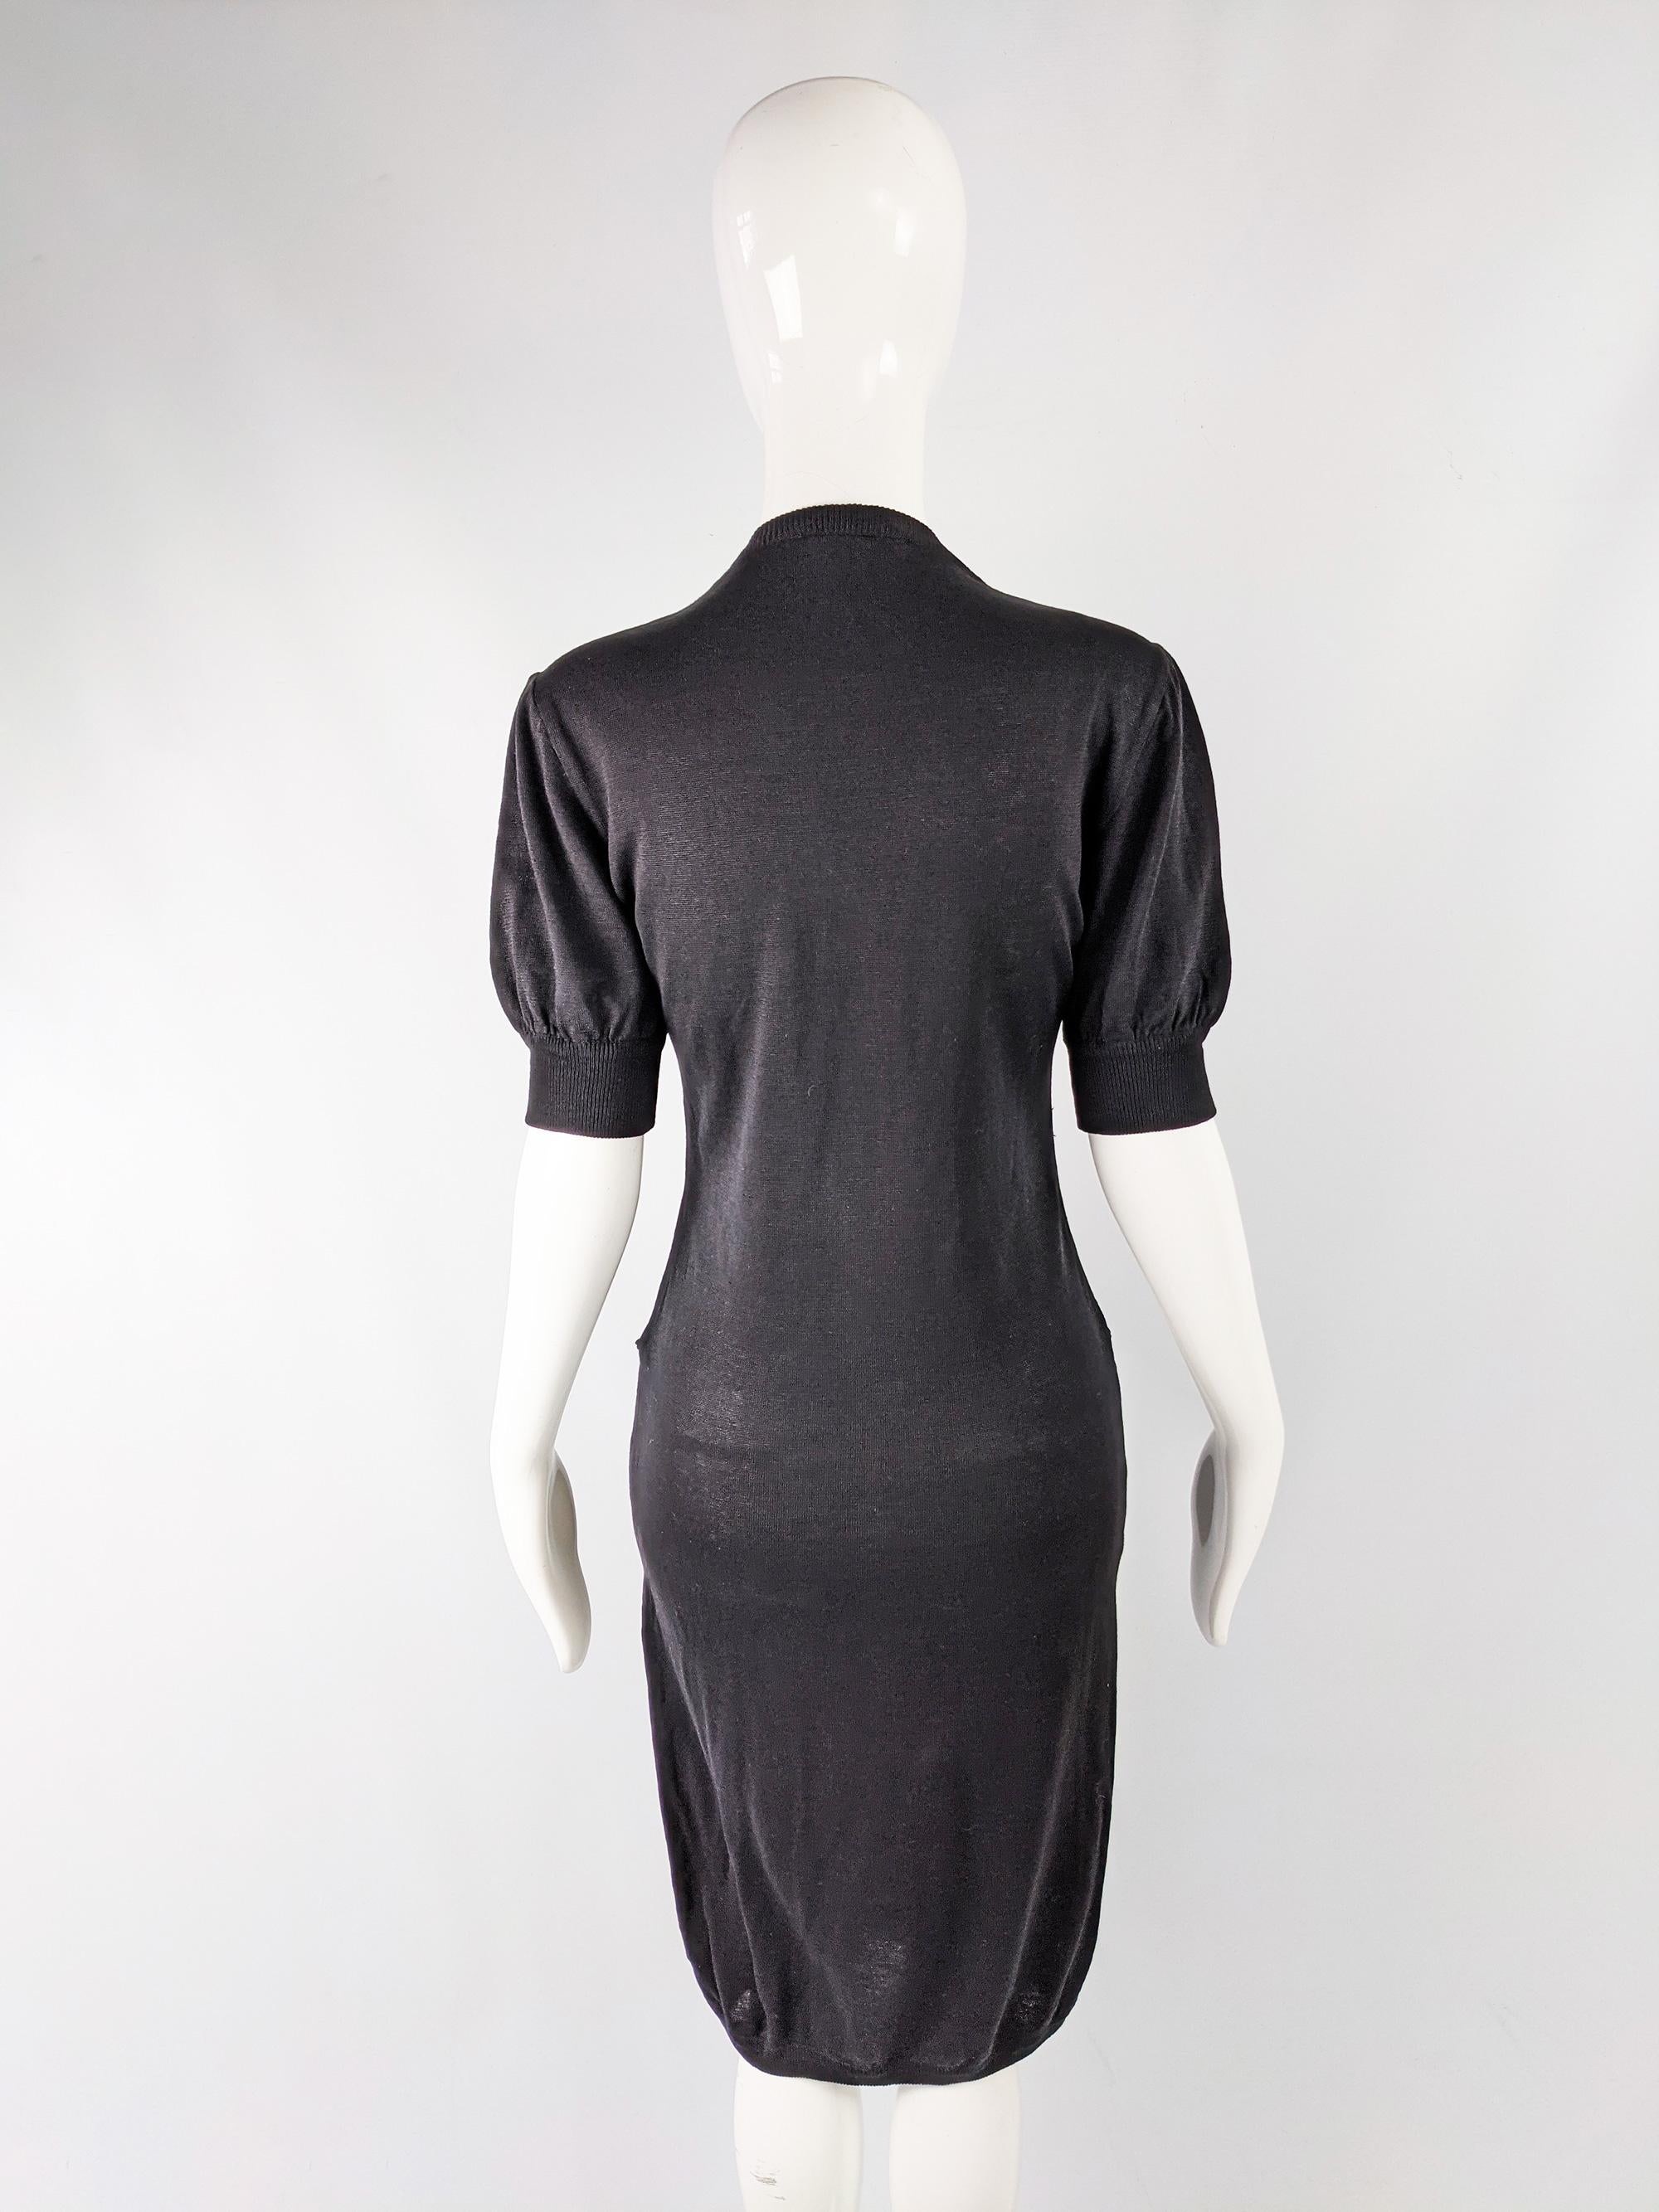 Mila Schon Vintage Black Twisted Knit Sweater Dress For Sale 2